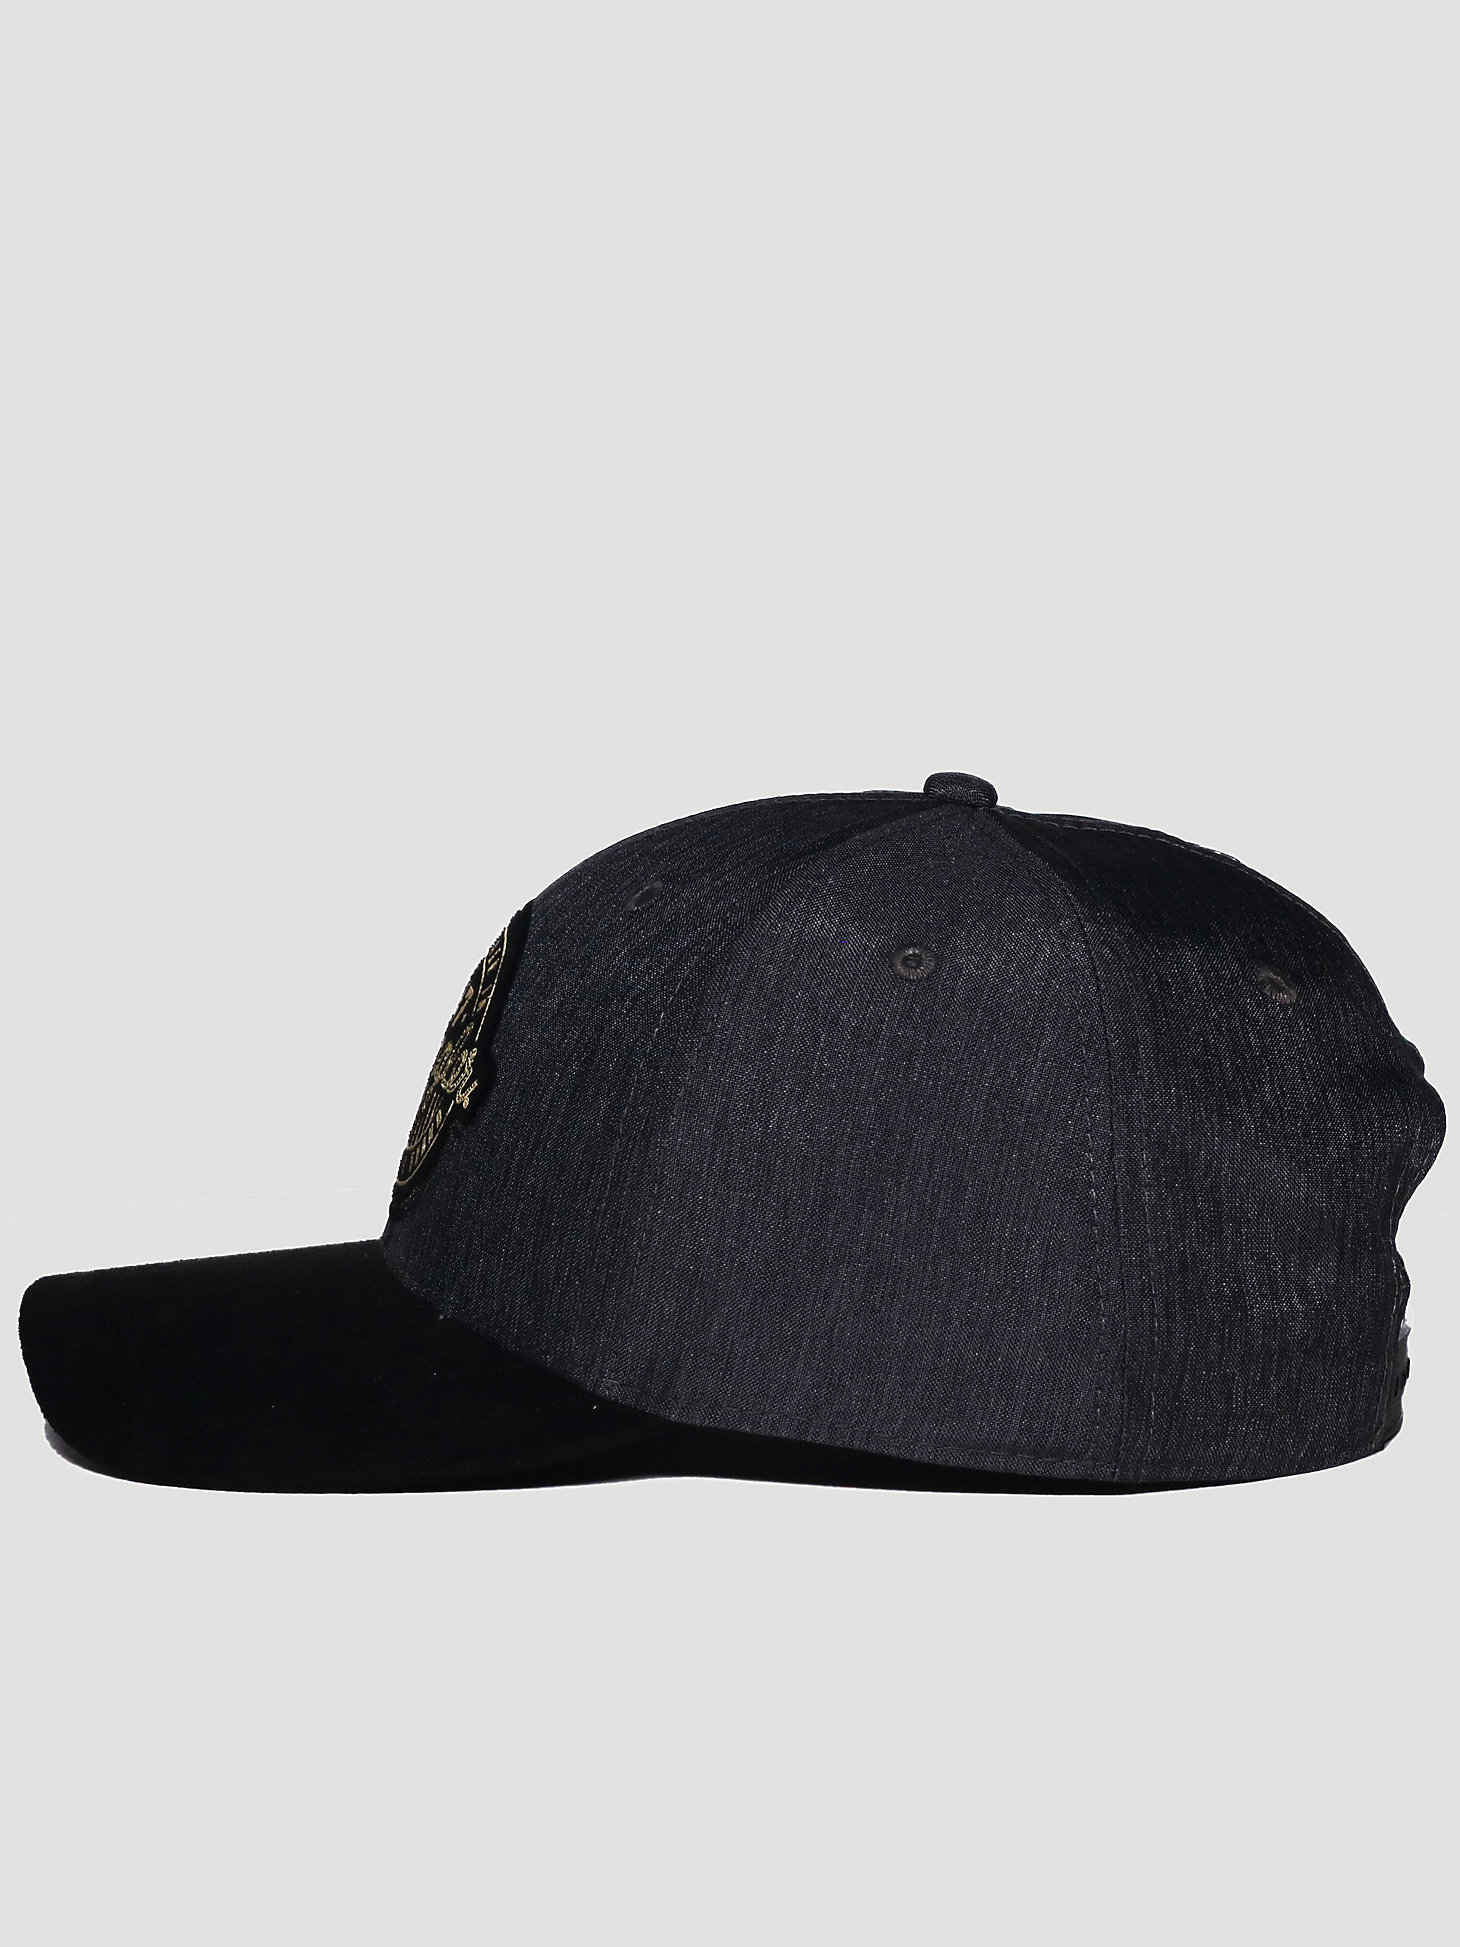 Mens Est. 1947 Wrangler Hat:Charcoal Heather:ONE SIZE alternative view 5